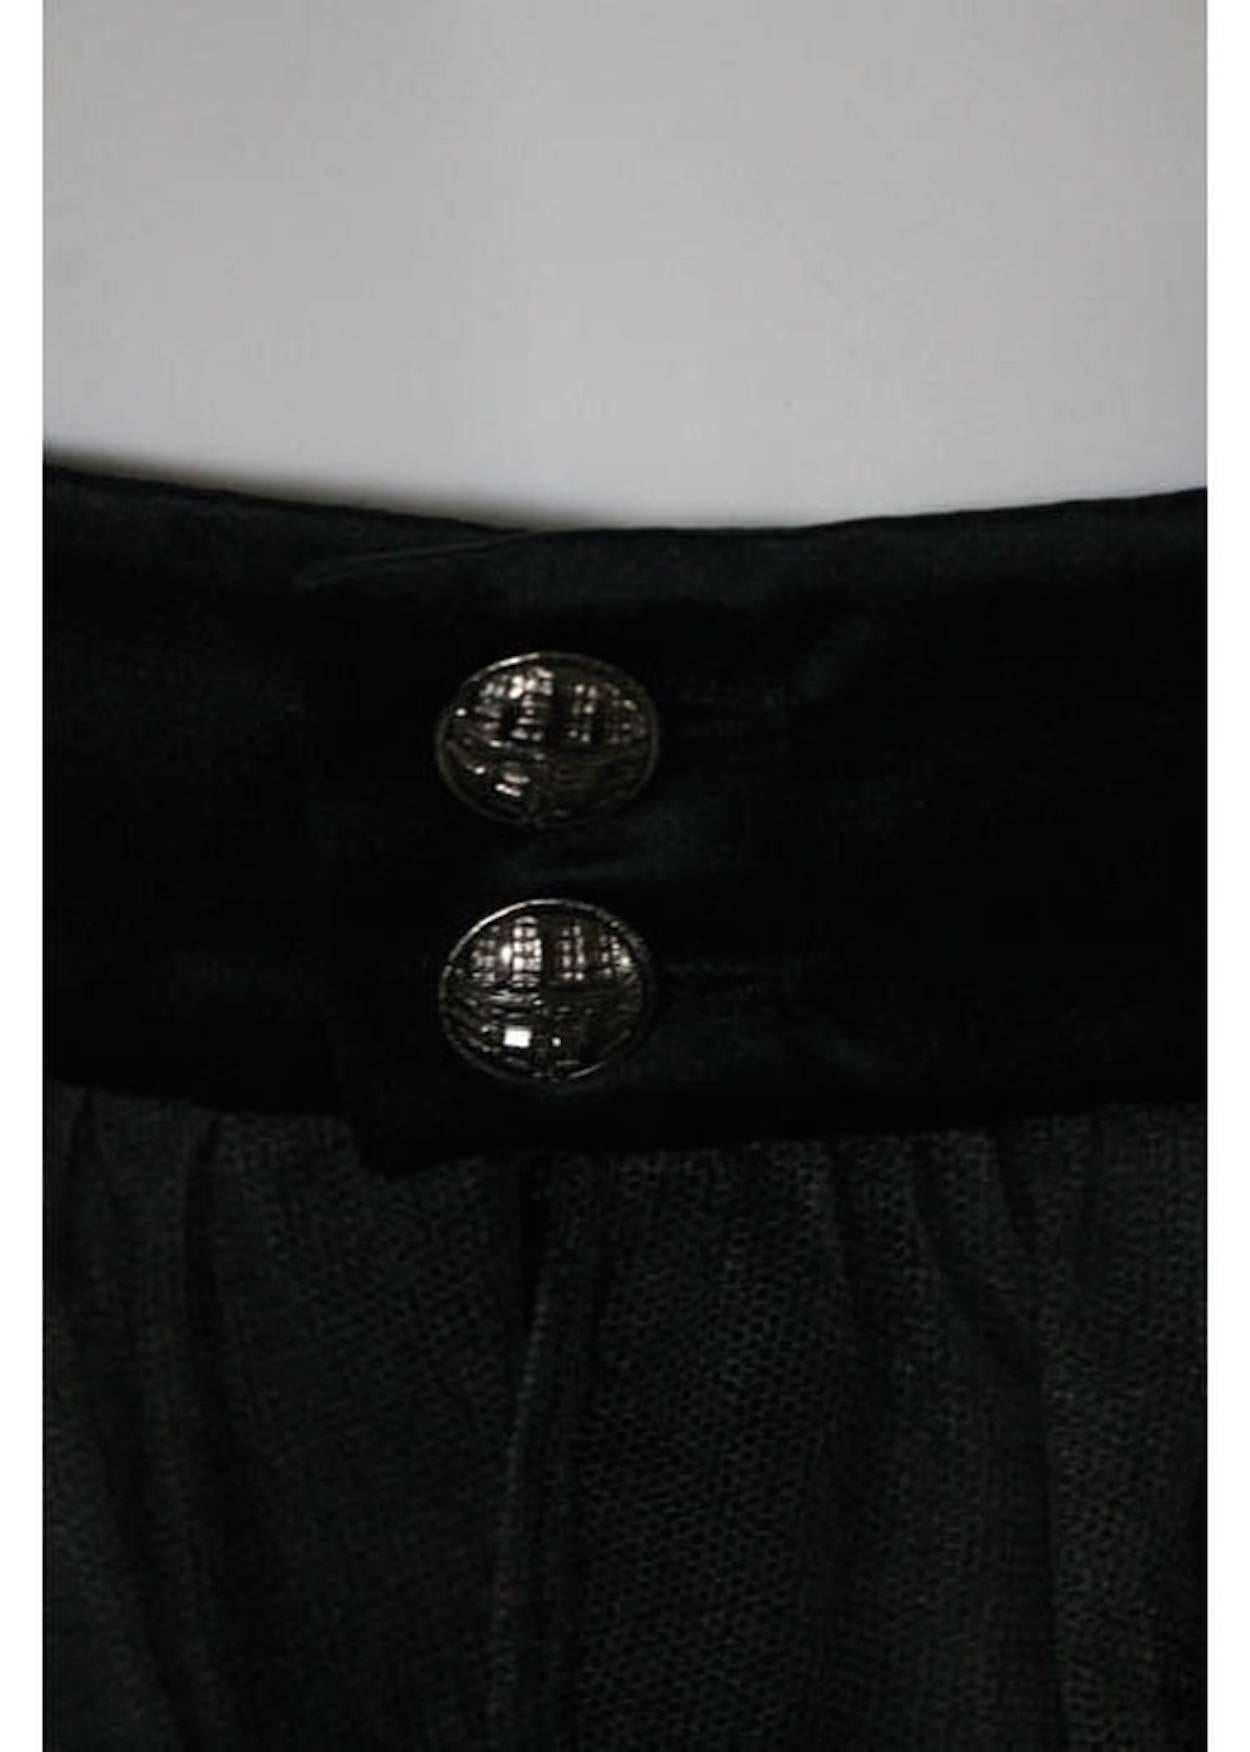 Chanel Rare Black and Gray Silk Sheer Empire Waist Sleeveless Dress Gown 1